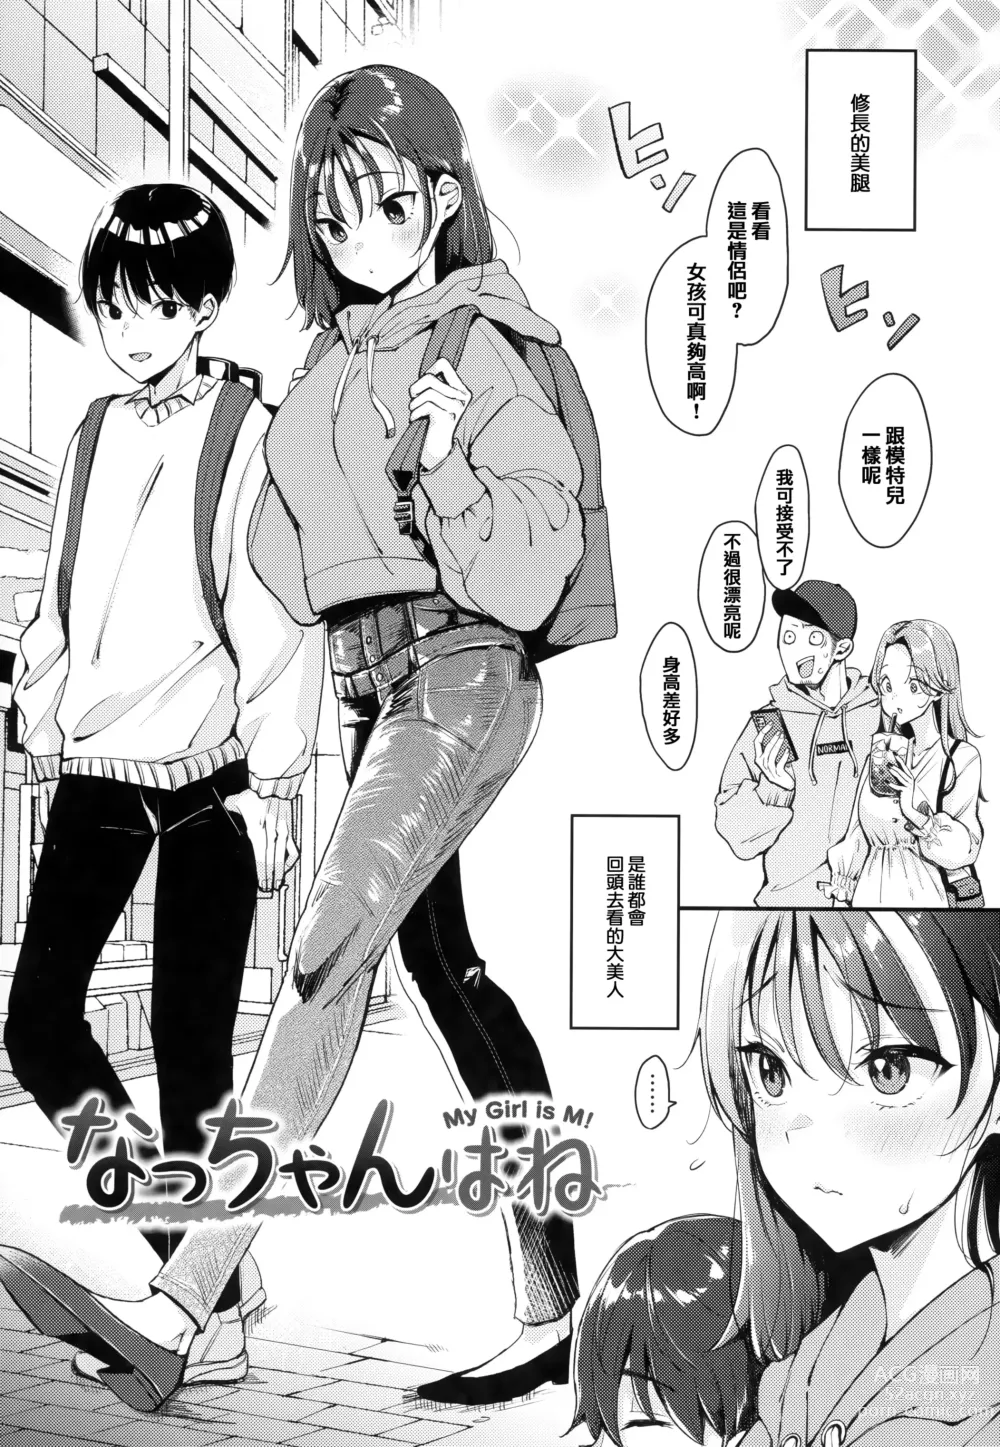 Page 7 of manga ちょっとMでドスケベで + メロンブックス限定小冊子 キャラクタープロット集